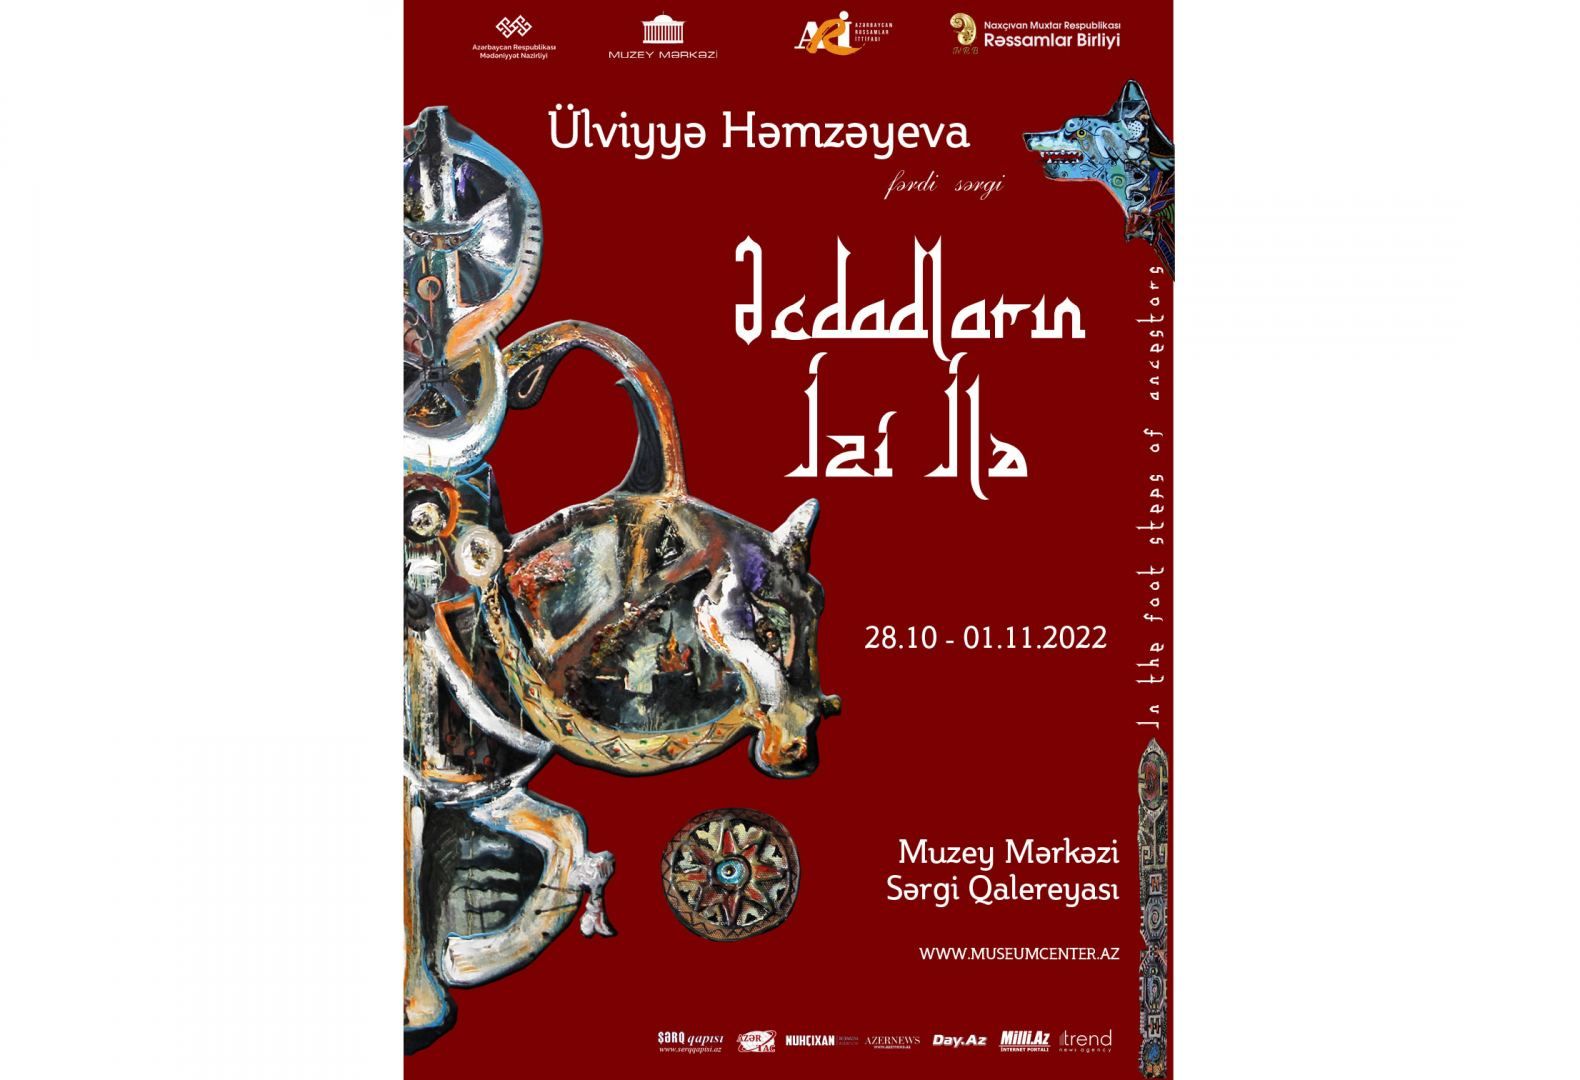 "In the footsteps of ancestors" - Ulviyya Hamzayeva's colorful world